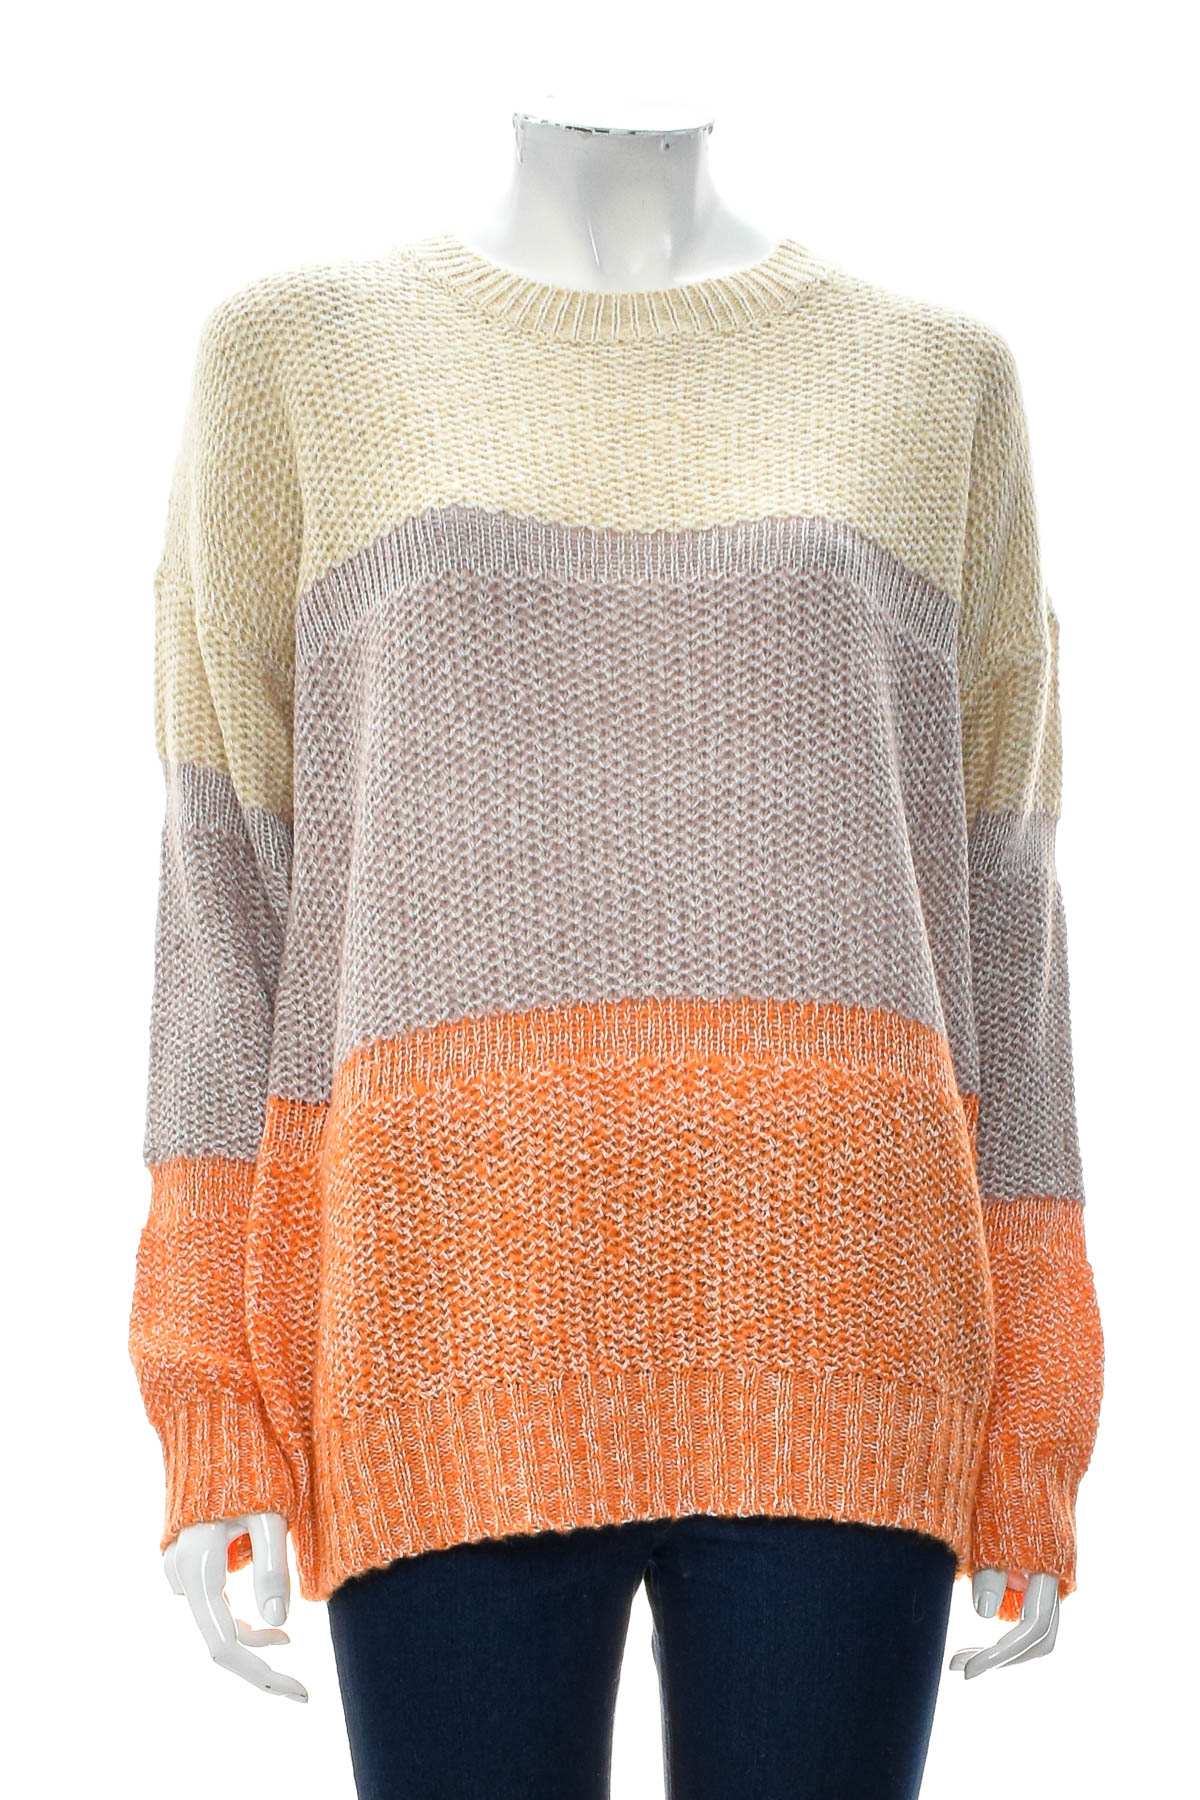 Women's sweater - Yidarton - 0